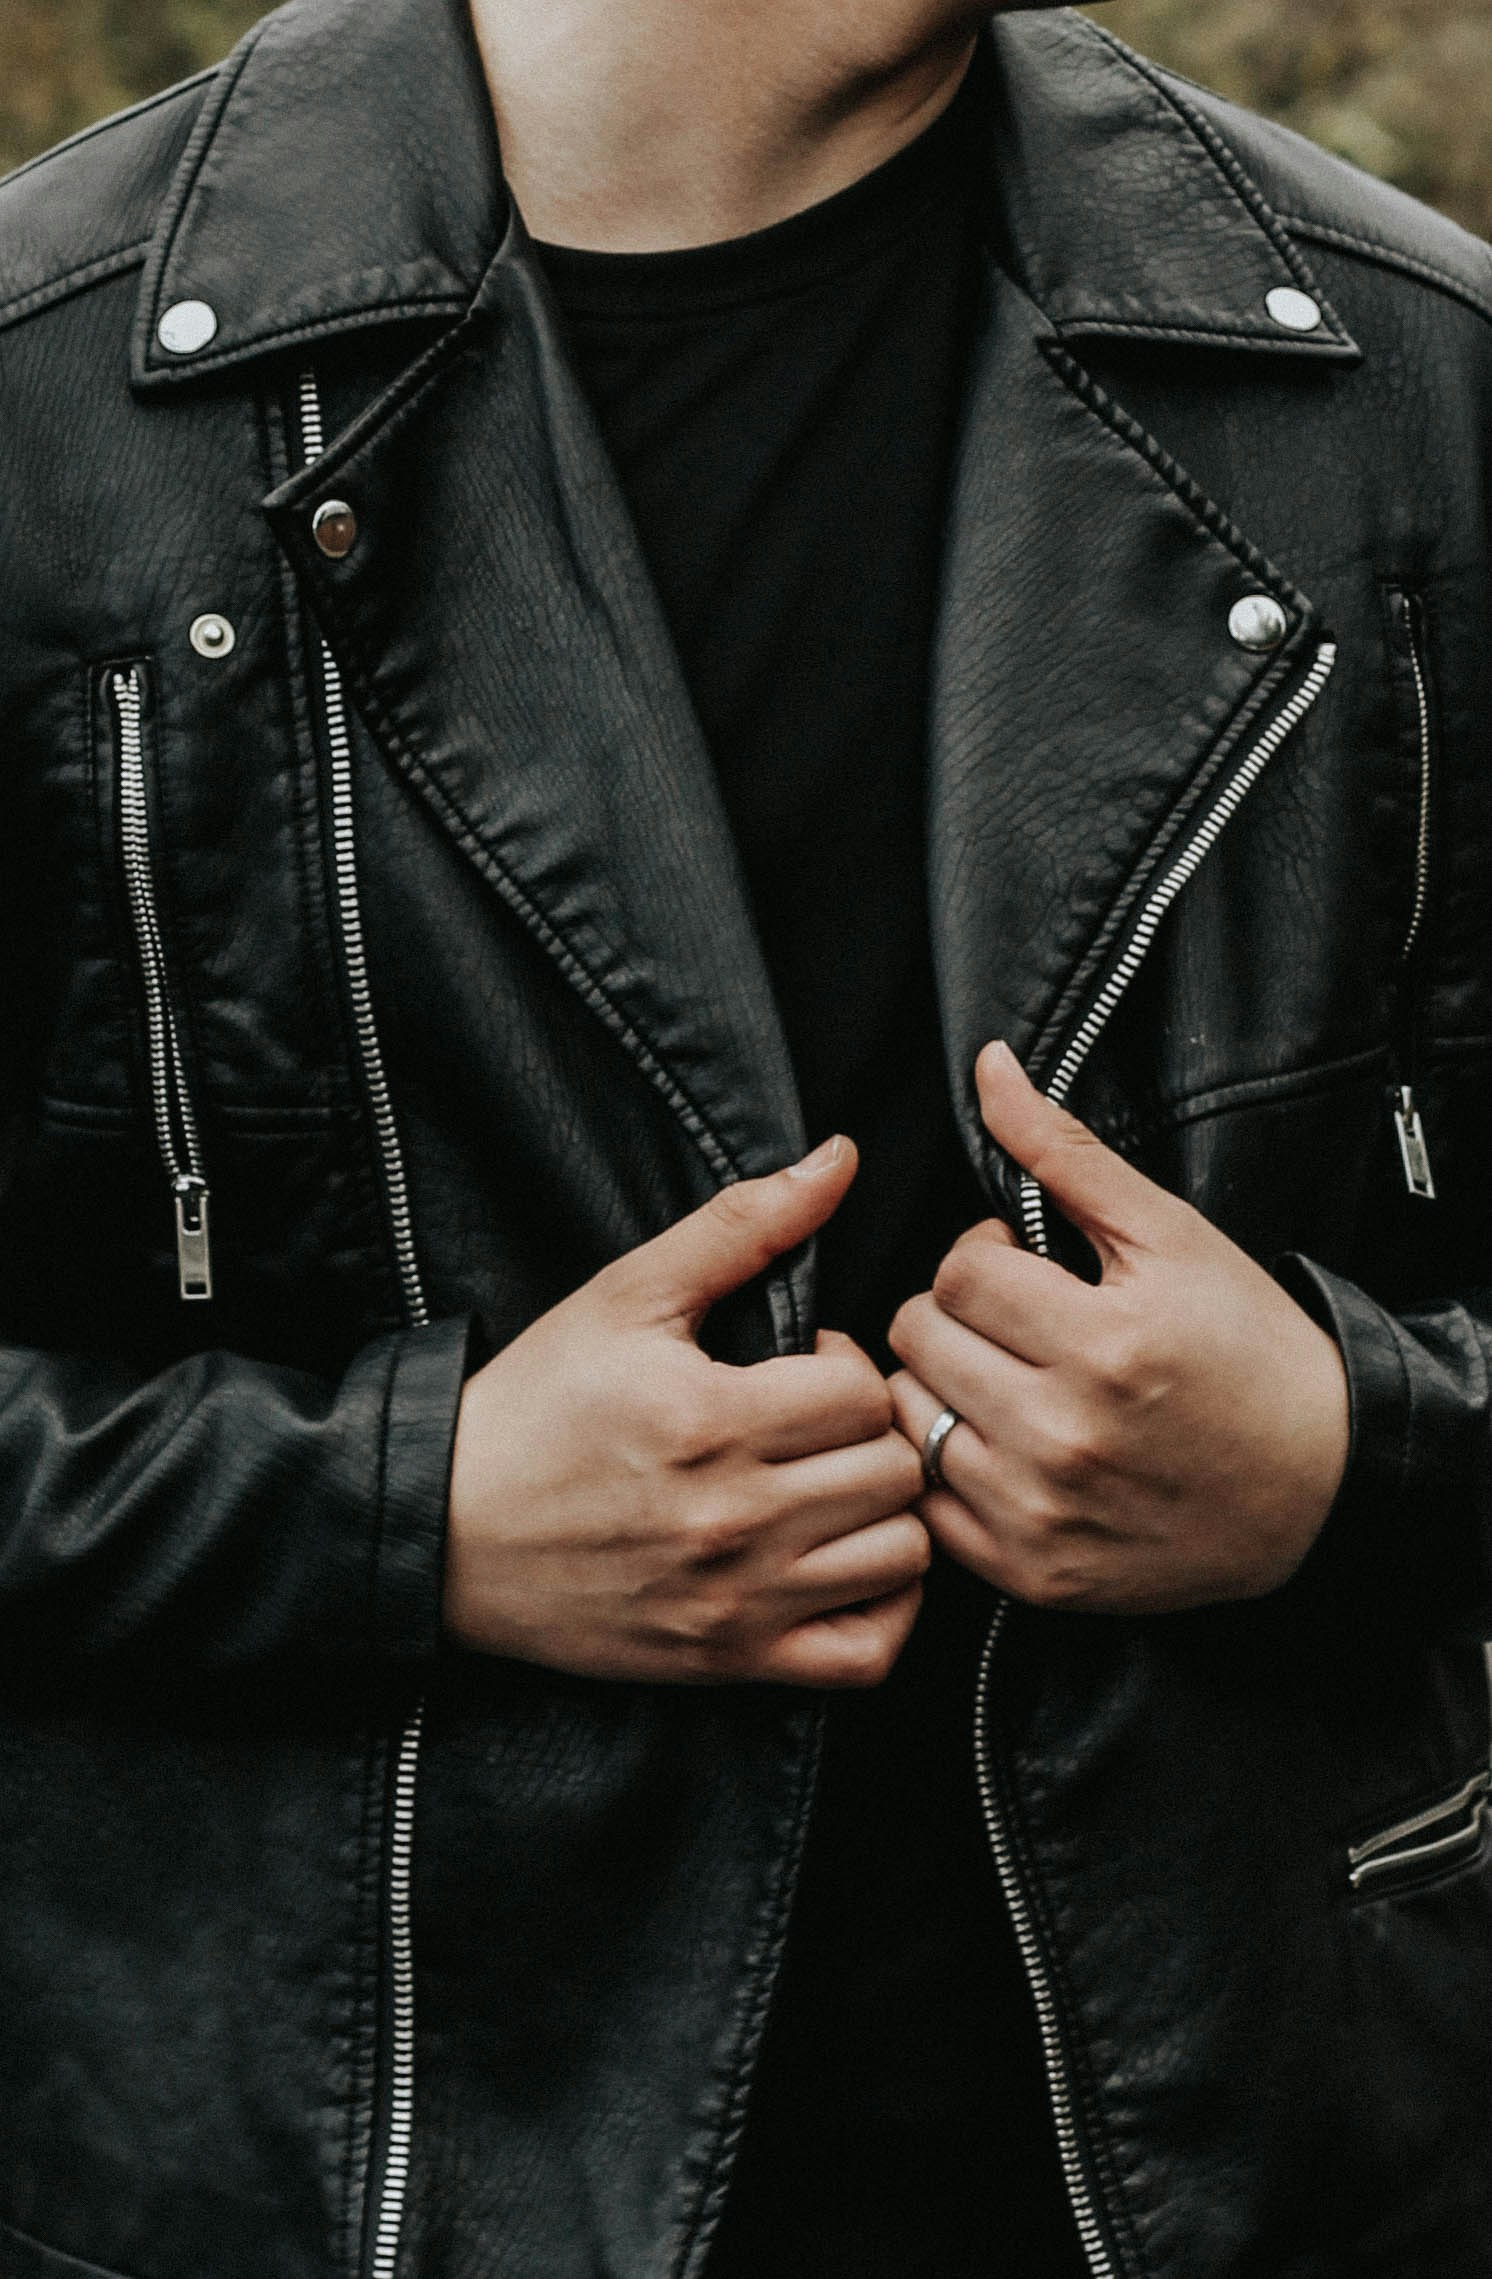 A man wearing a black jacket | Source: Unsplash